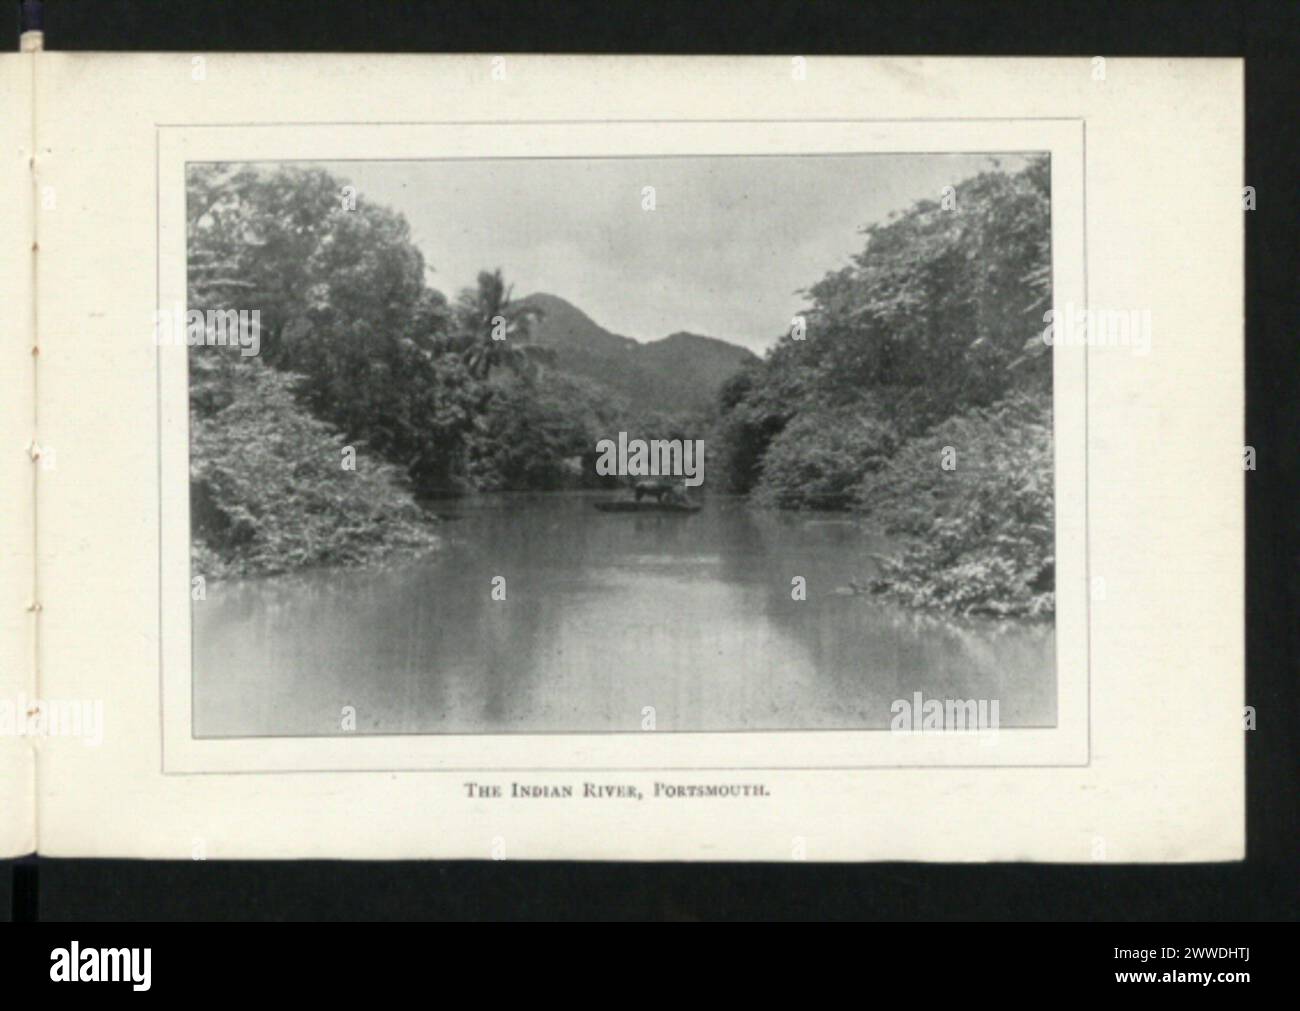 Description: The Indian River, Portsmouth. Location: Portsmouth, Dominica Date: 1905 caribbean, dominica, caribbeanthroughalens Stock Photo